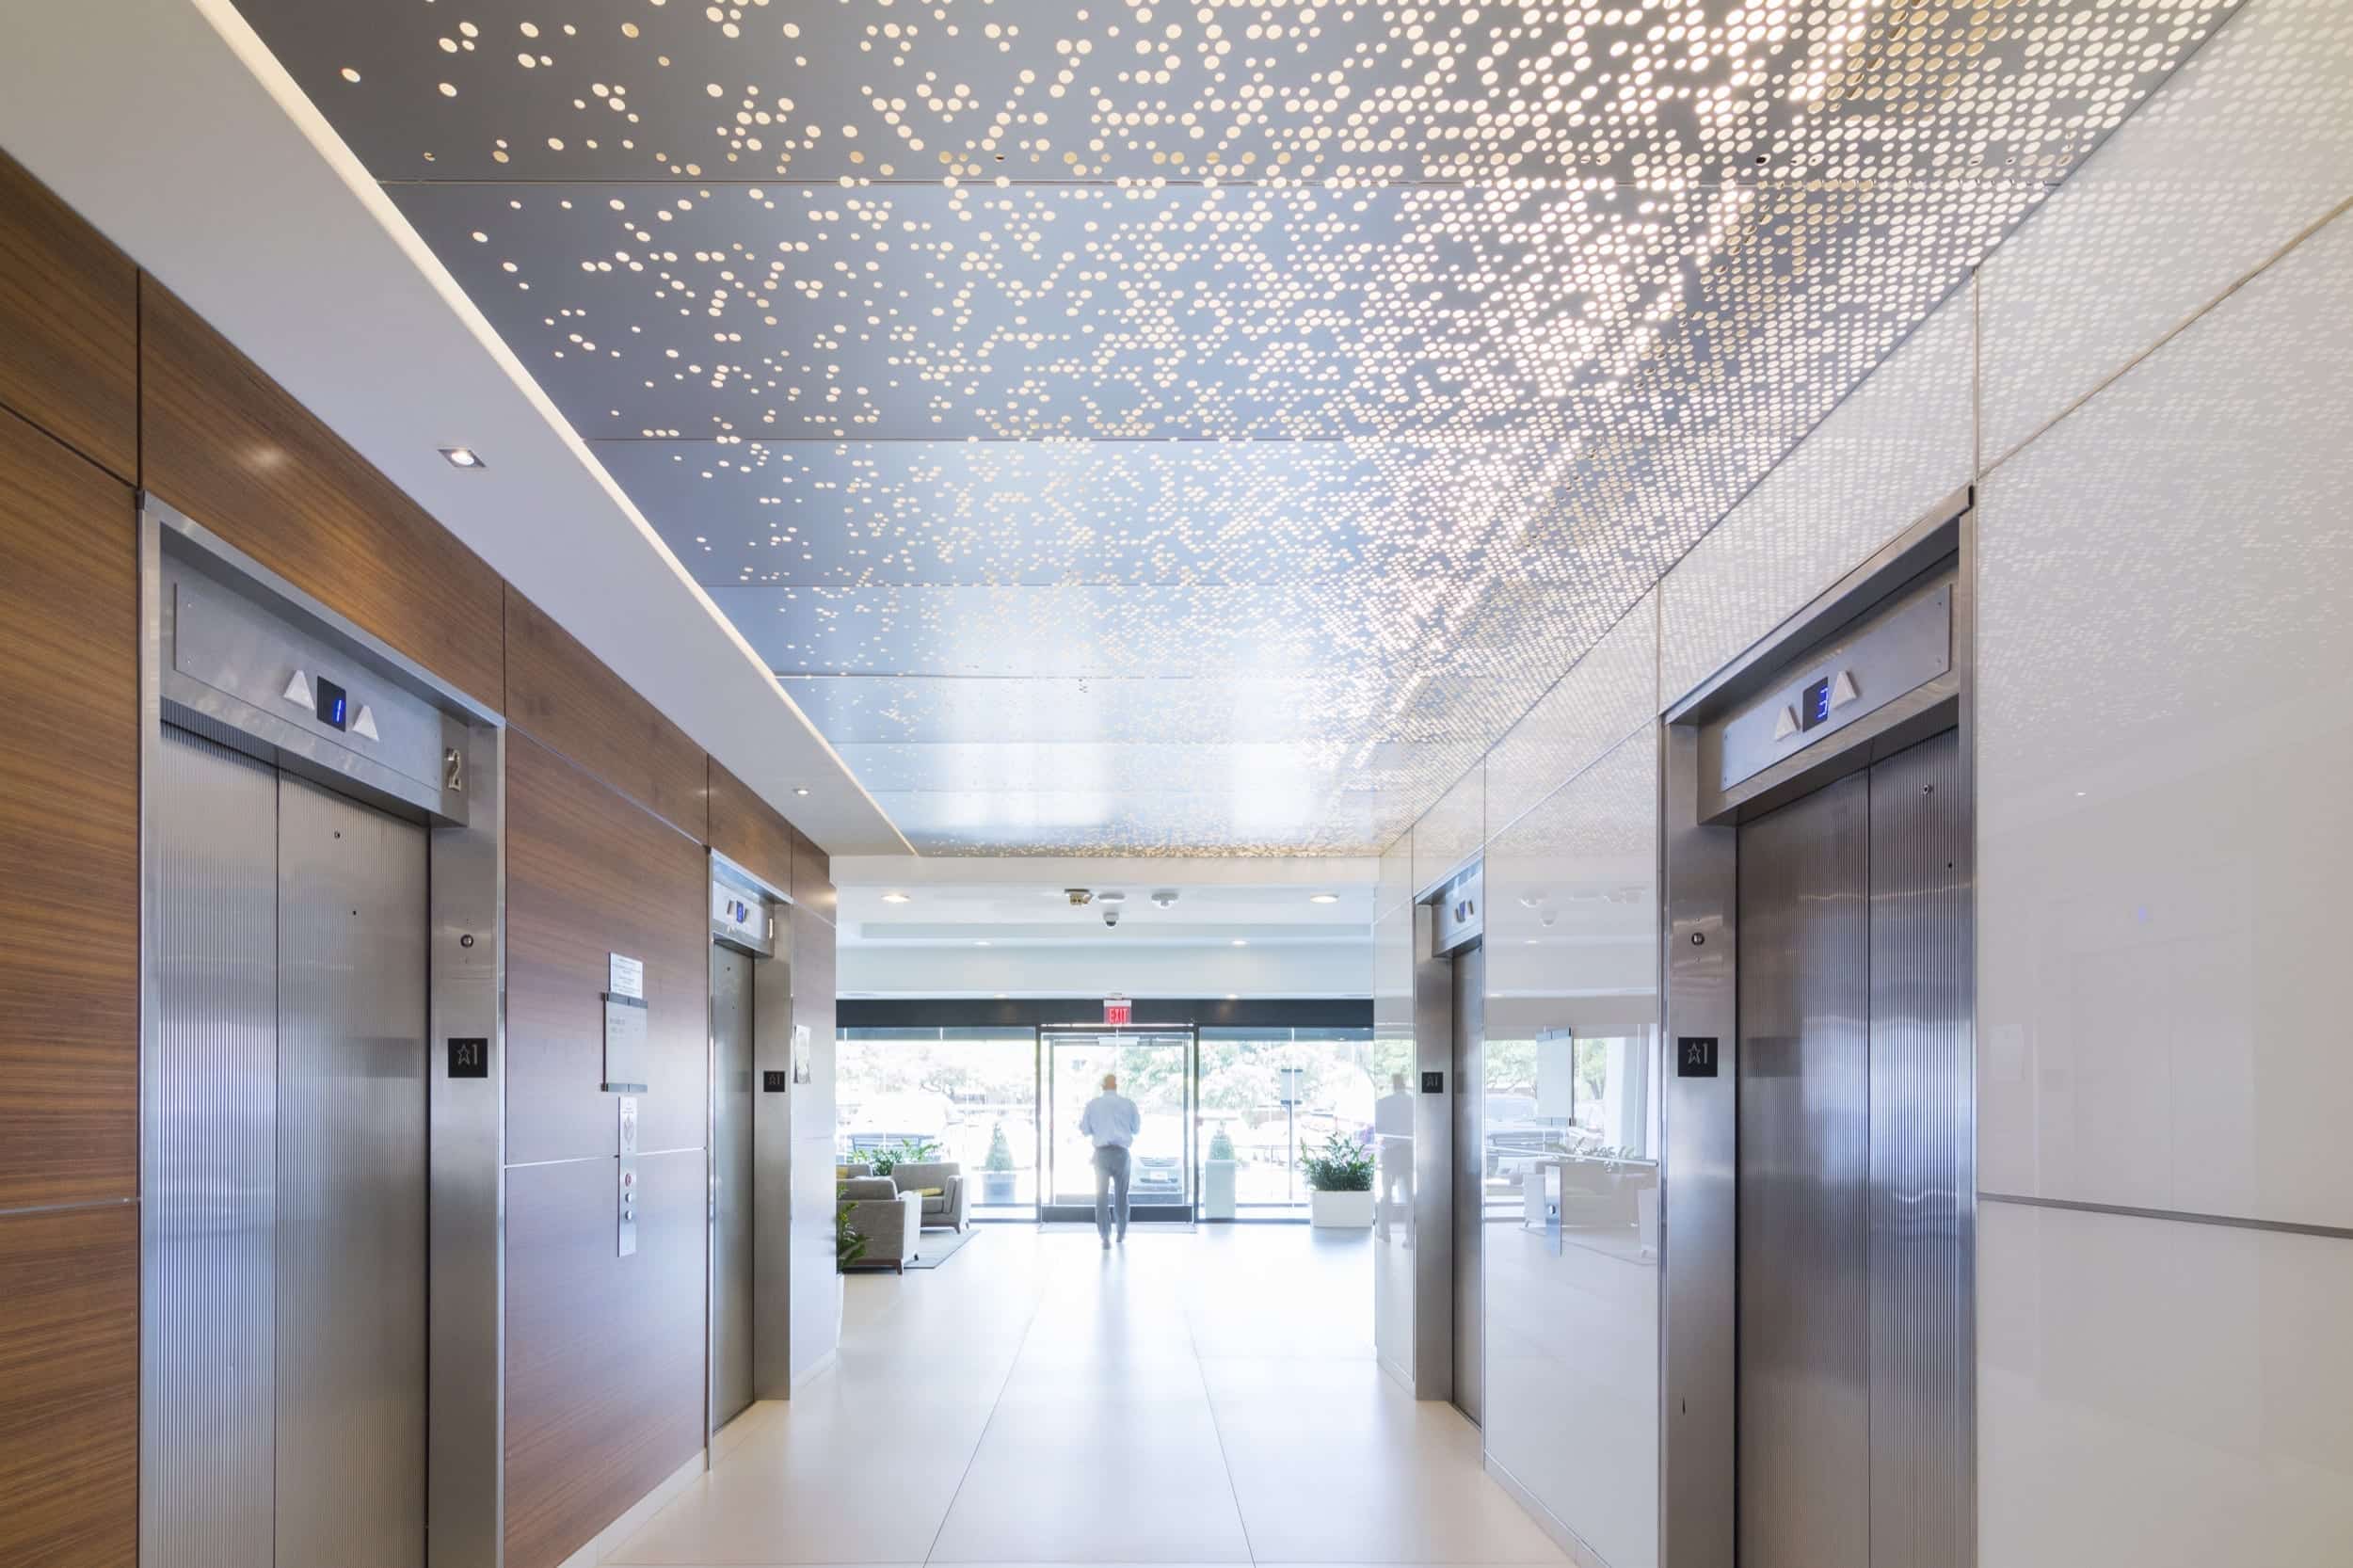 Backlit ImageWall ceiling in NCX 6060 Interior Lobby.